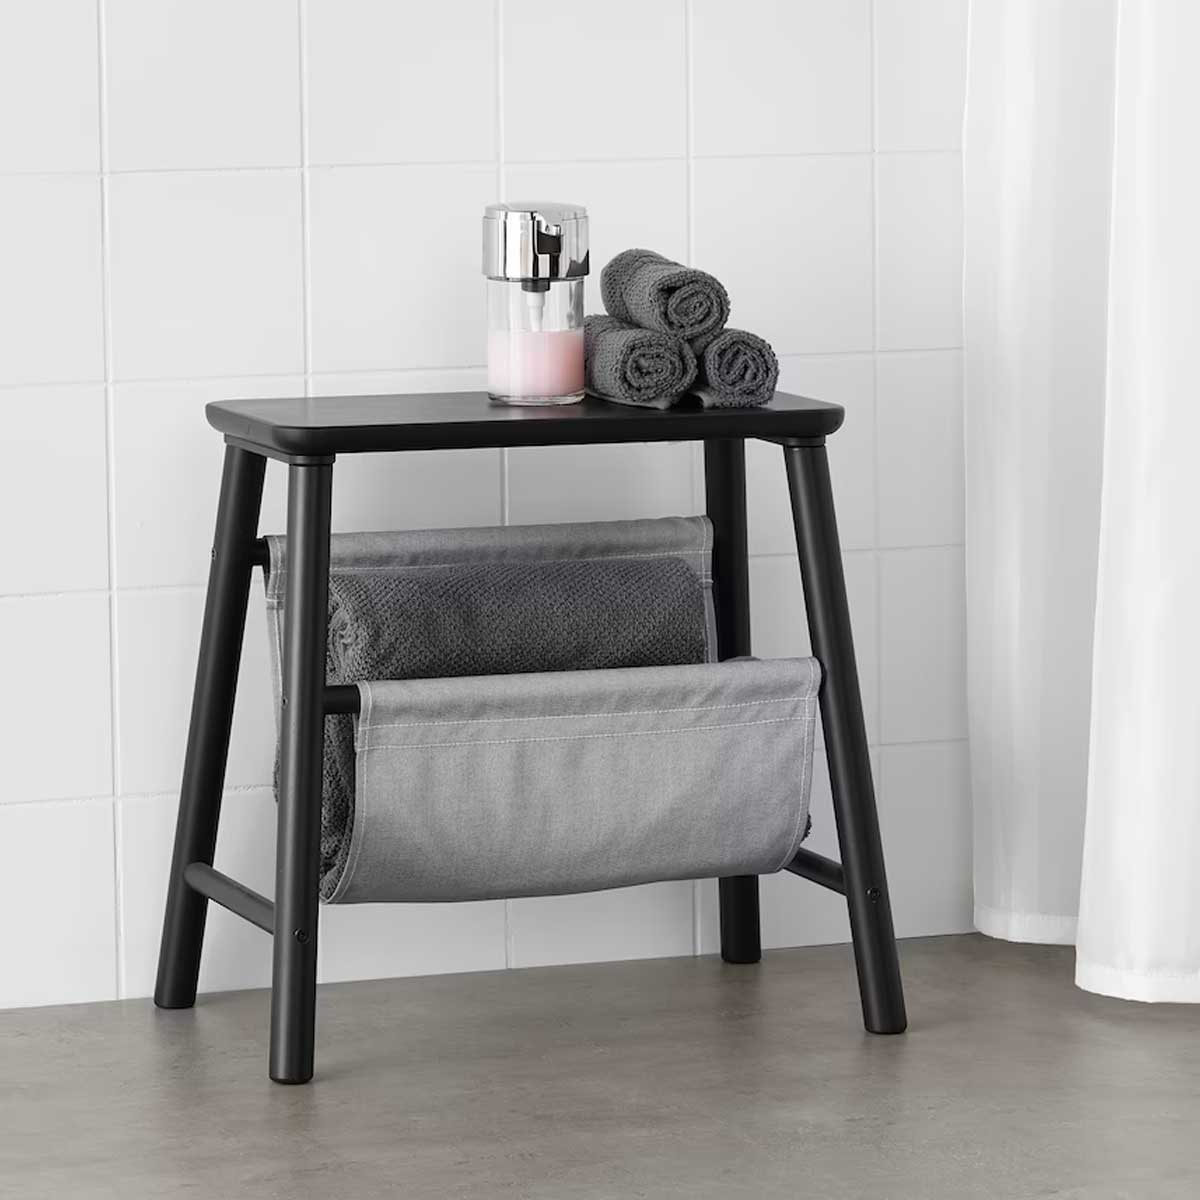 Vilto storage stool black